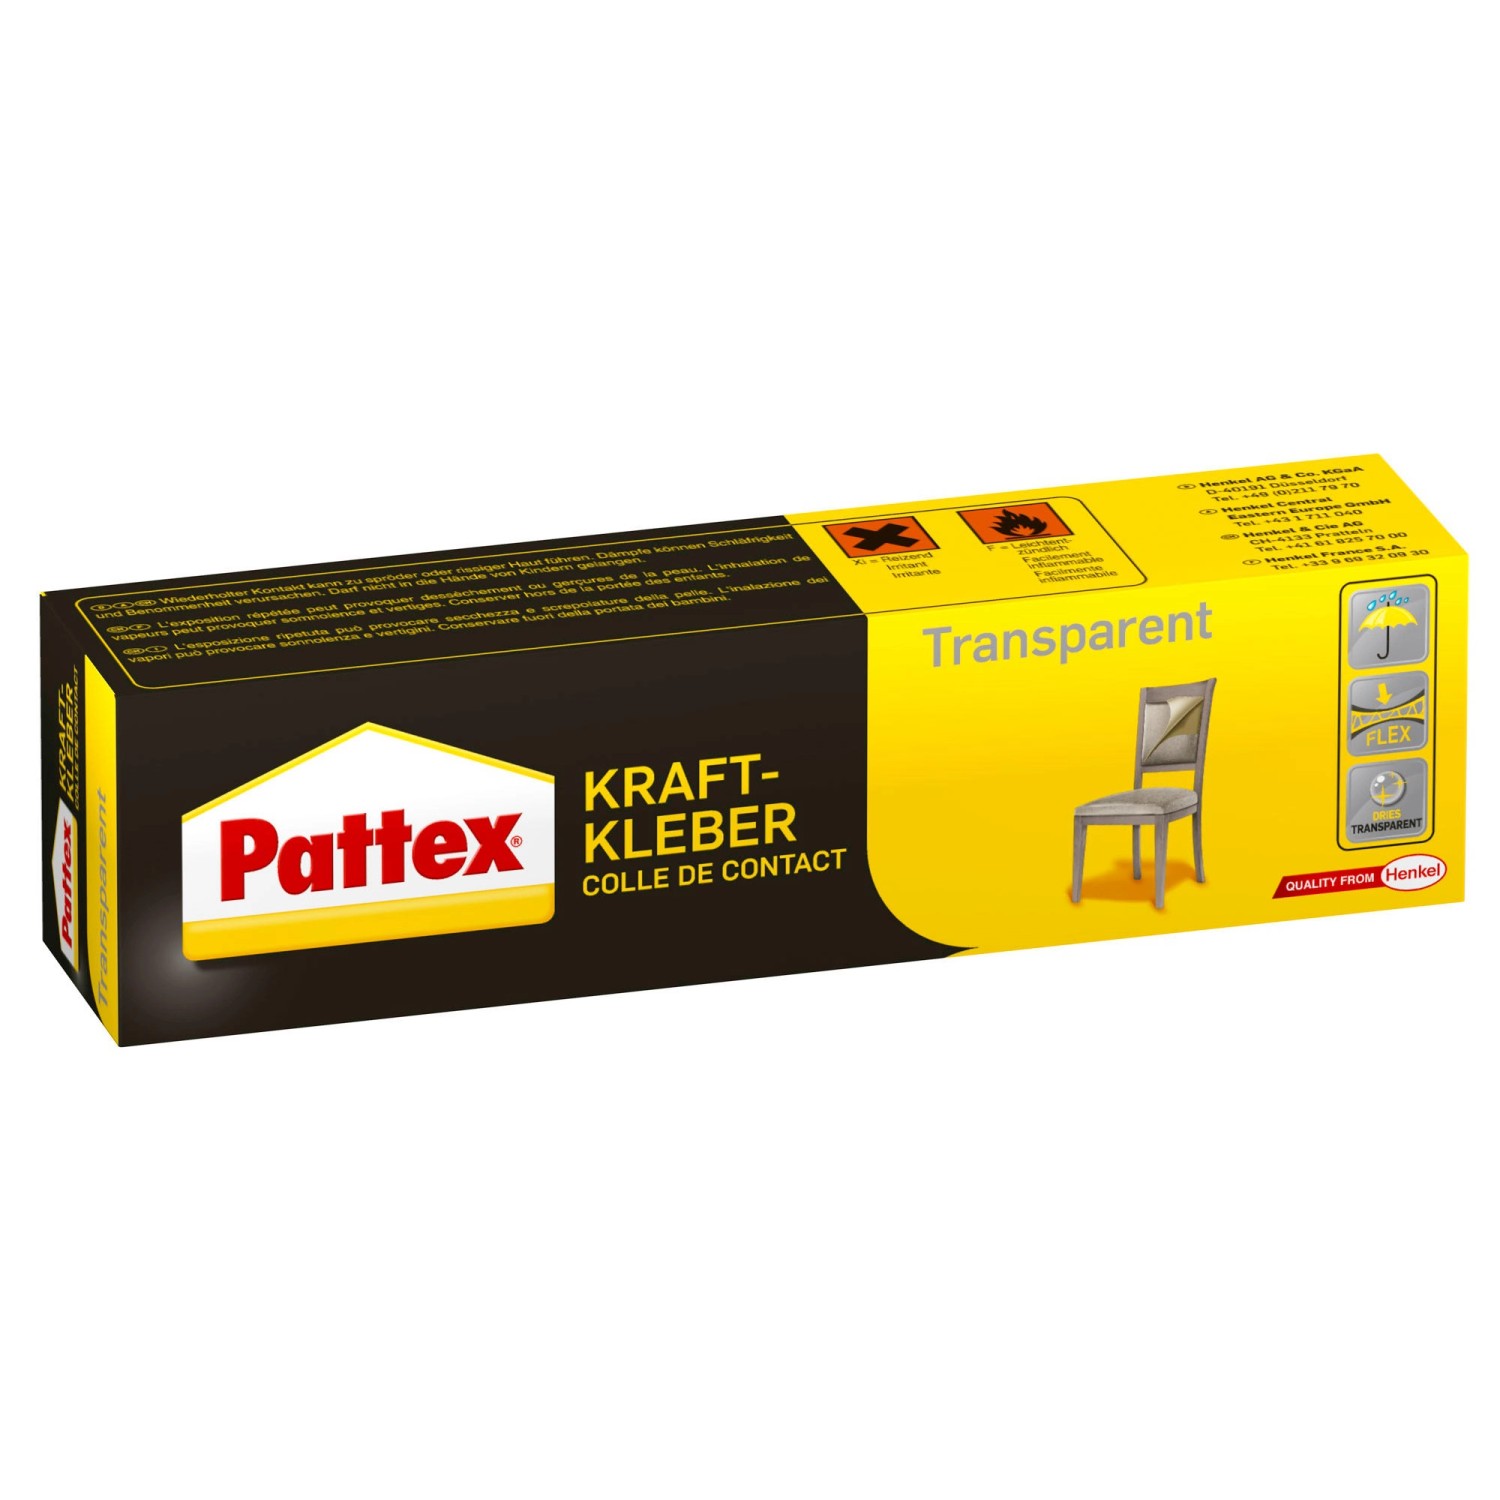 Pattex Kraftkleber Transparent 50 g Tube